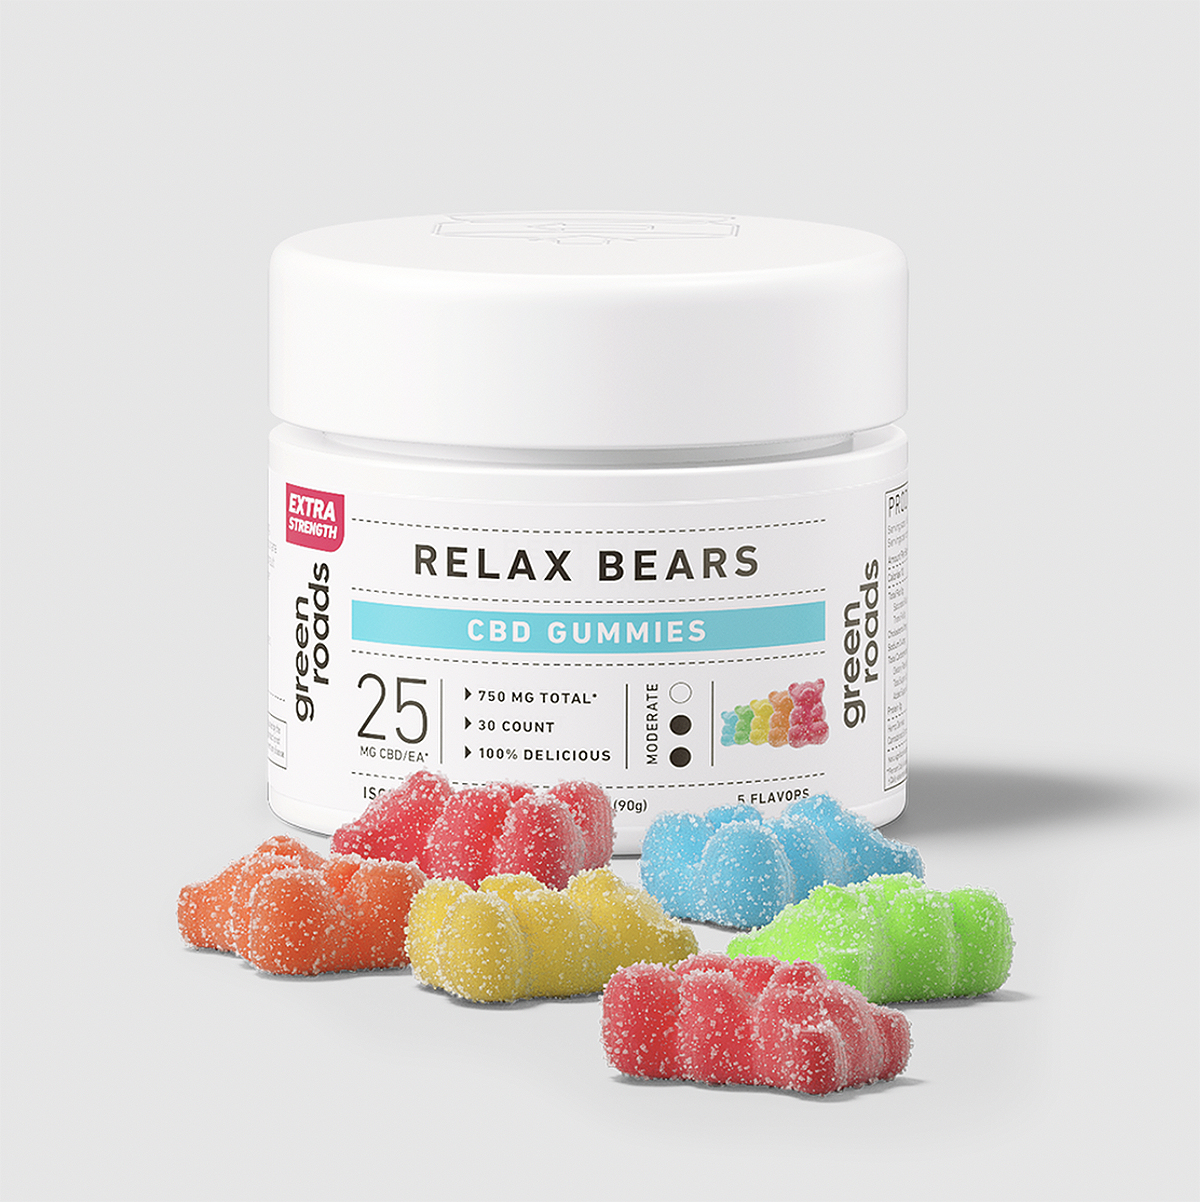 CBD anxiety gummy bears